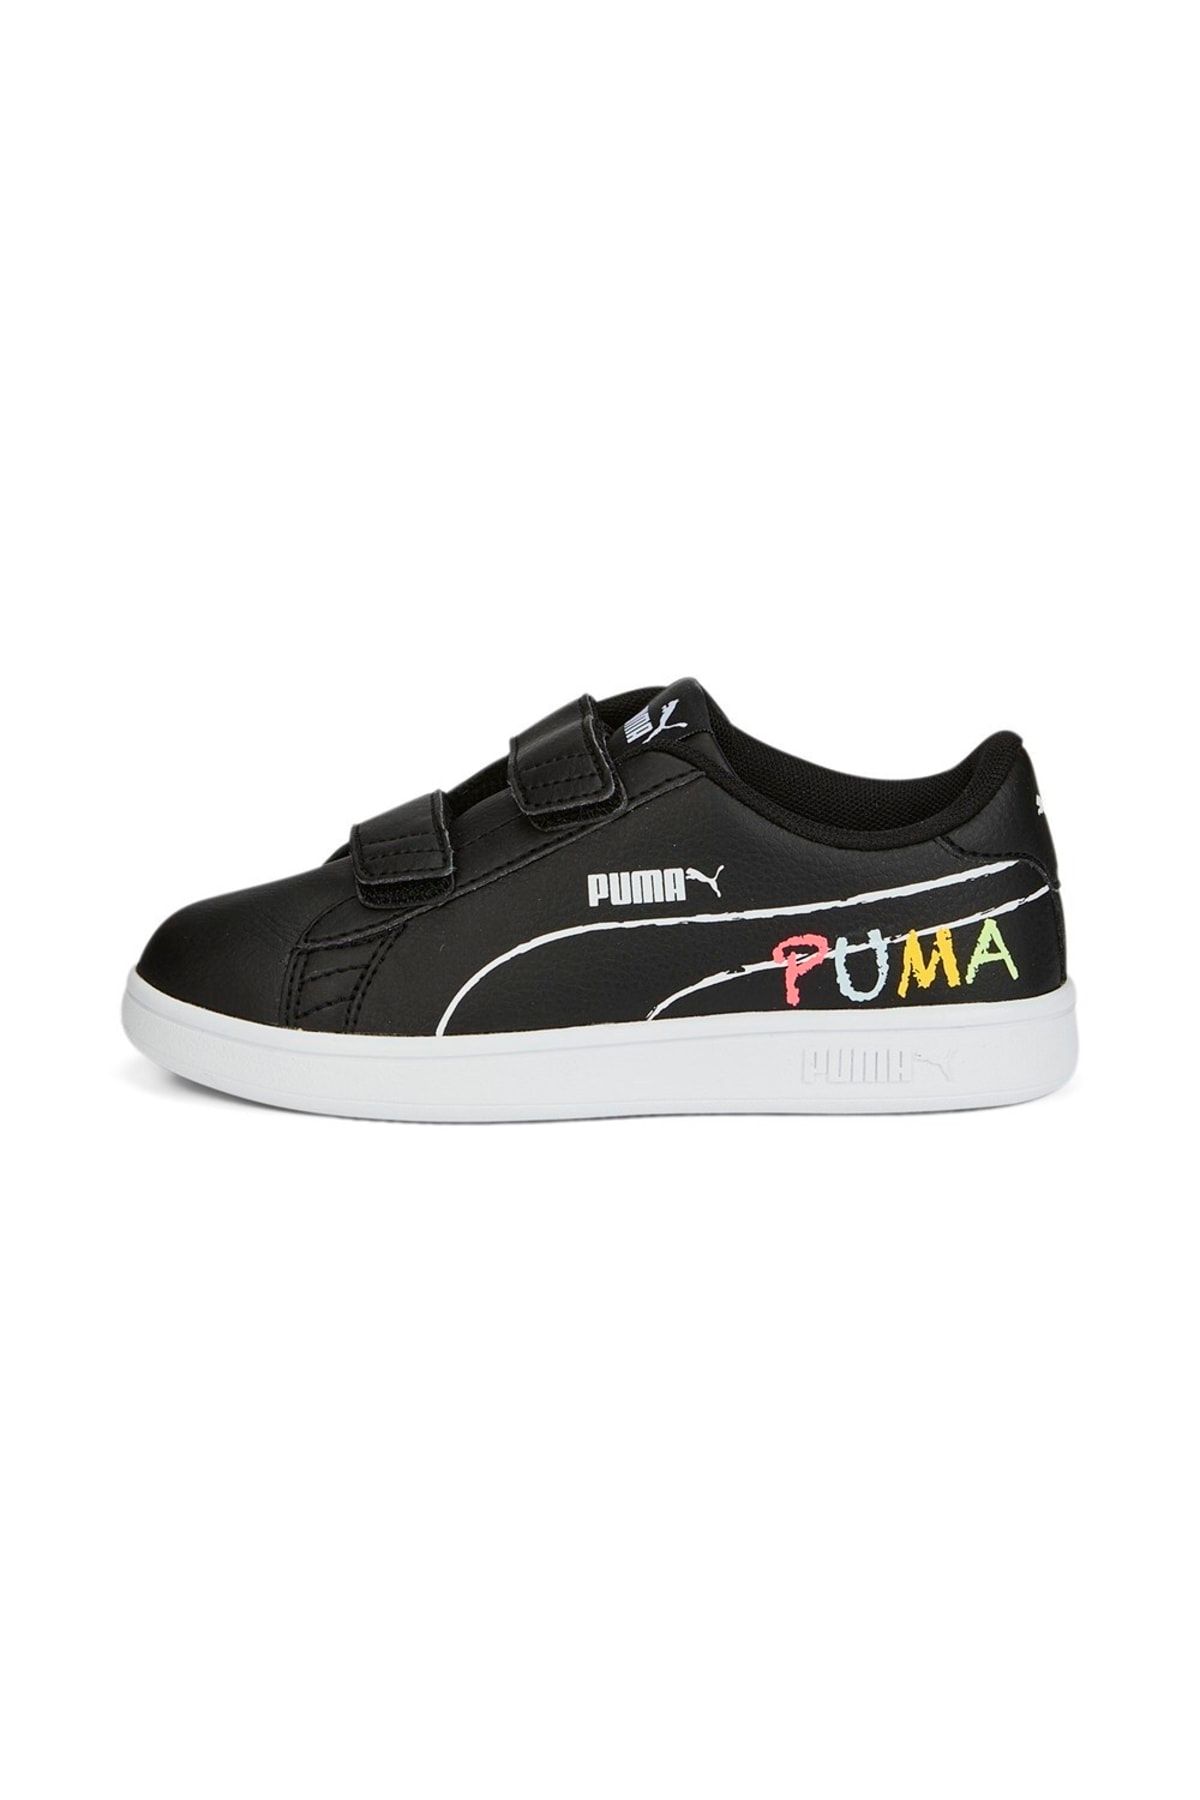 Puma Smash V2 Home School Siyah Unisex Çocuk Sneaker